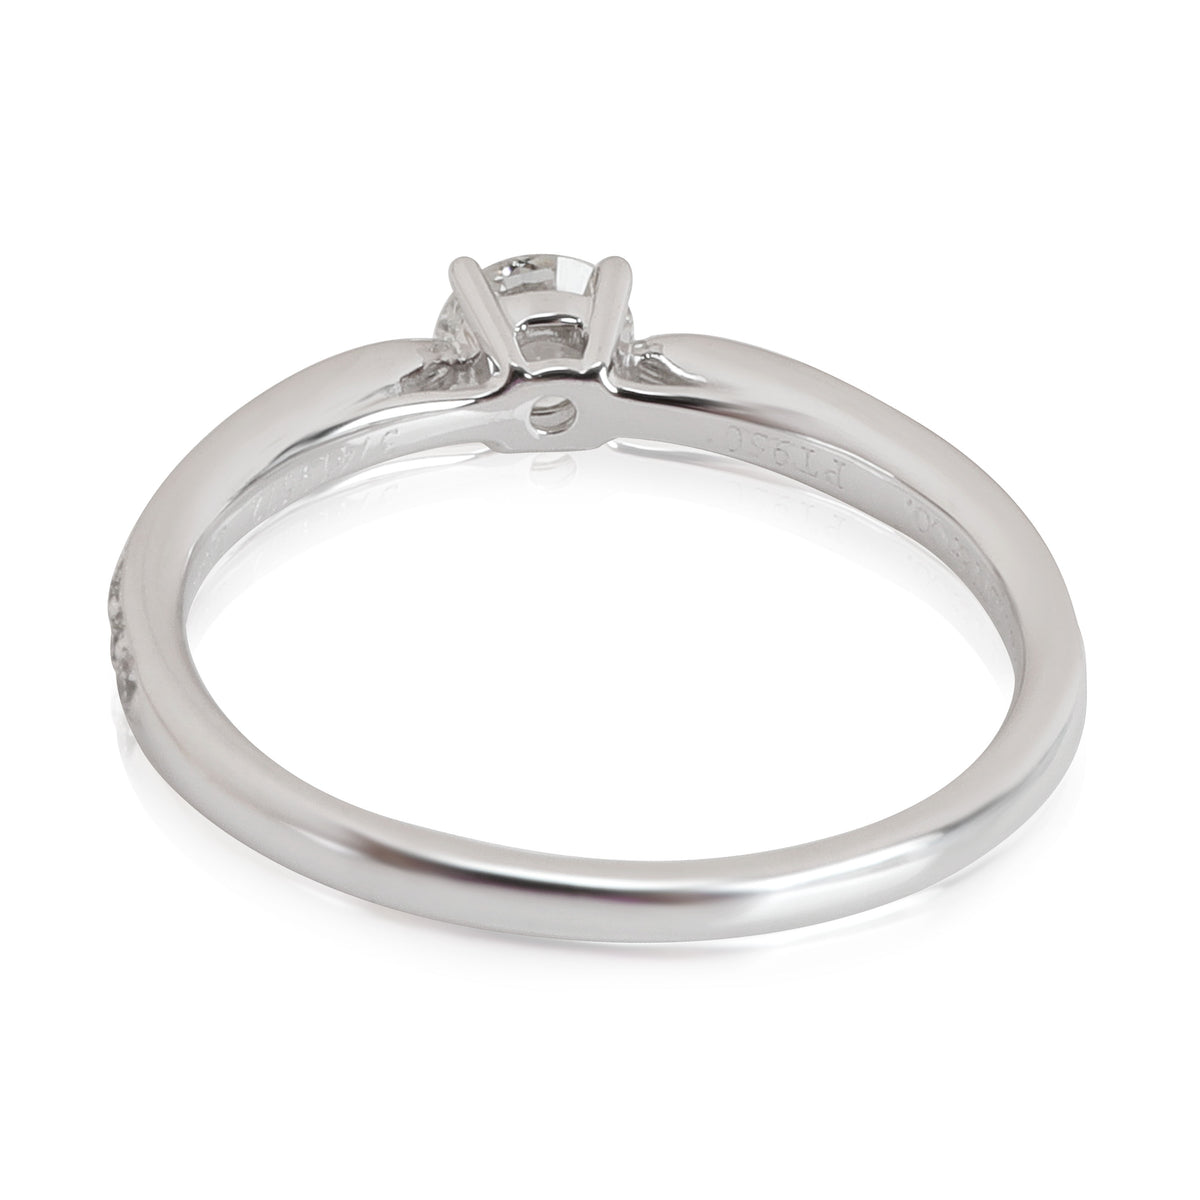 Tiffany & Co. Harmony Diamond Engagement Ring in Platinum F VS1